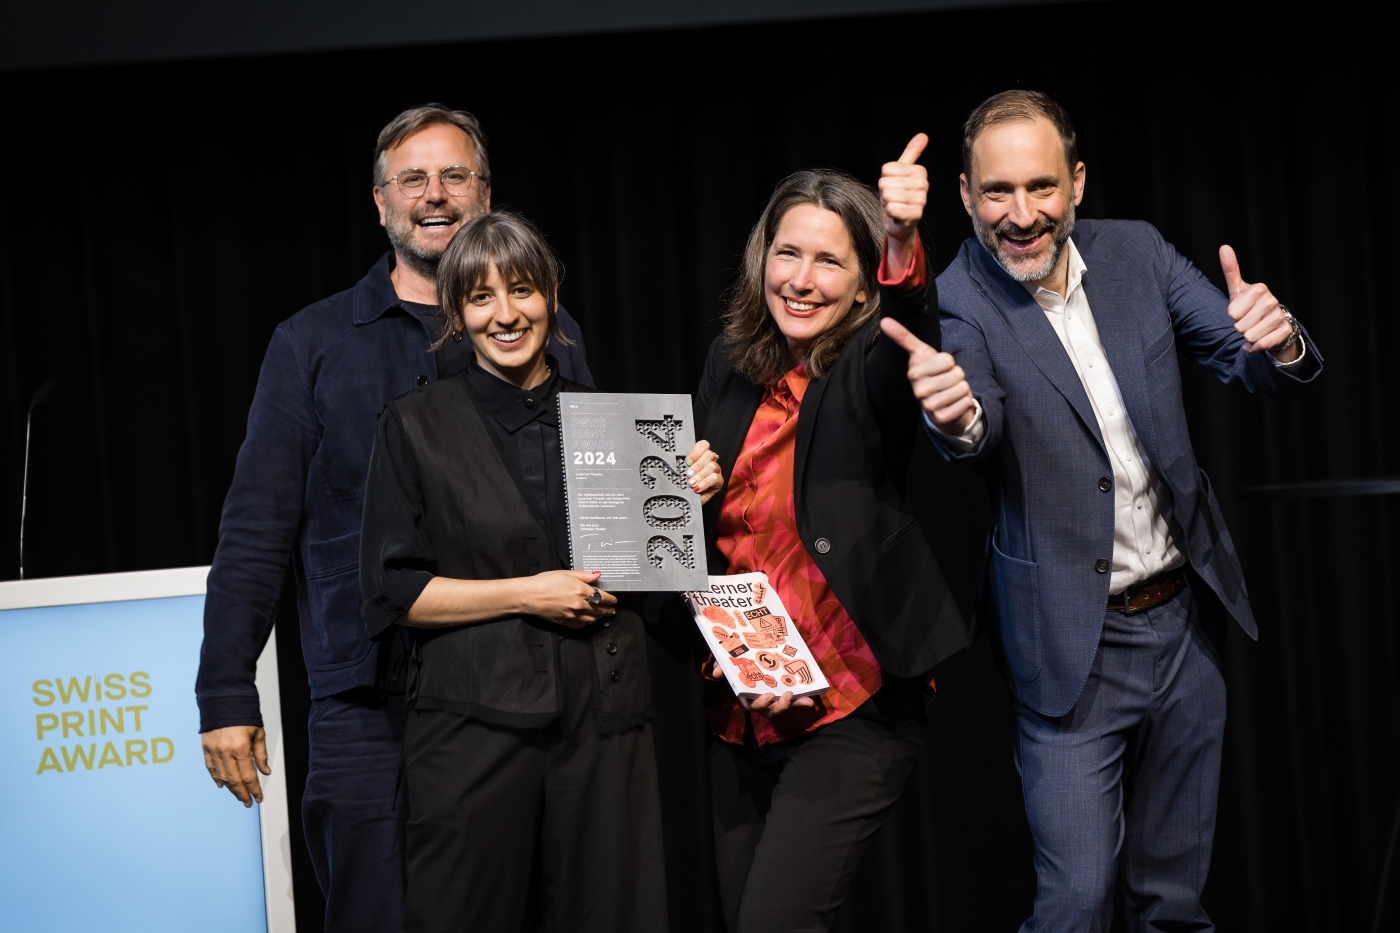 Luzerner Theater beim Swiss Print Award